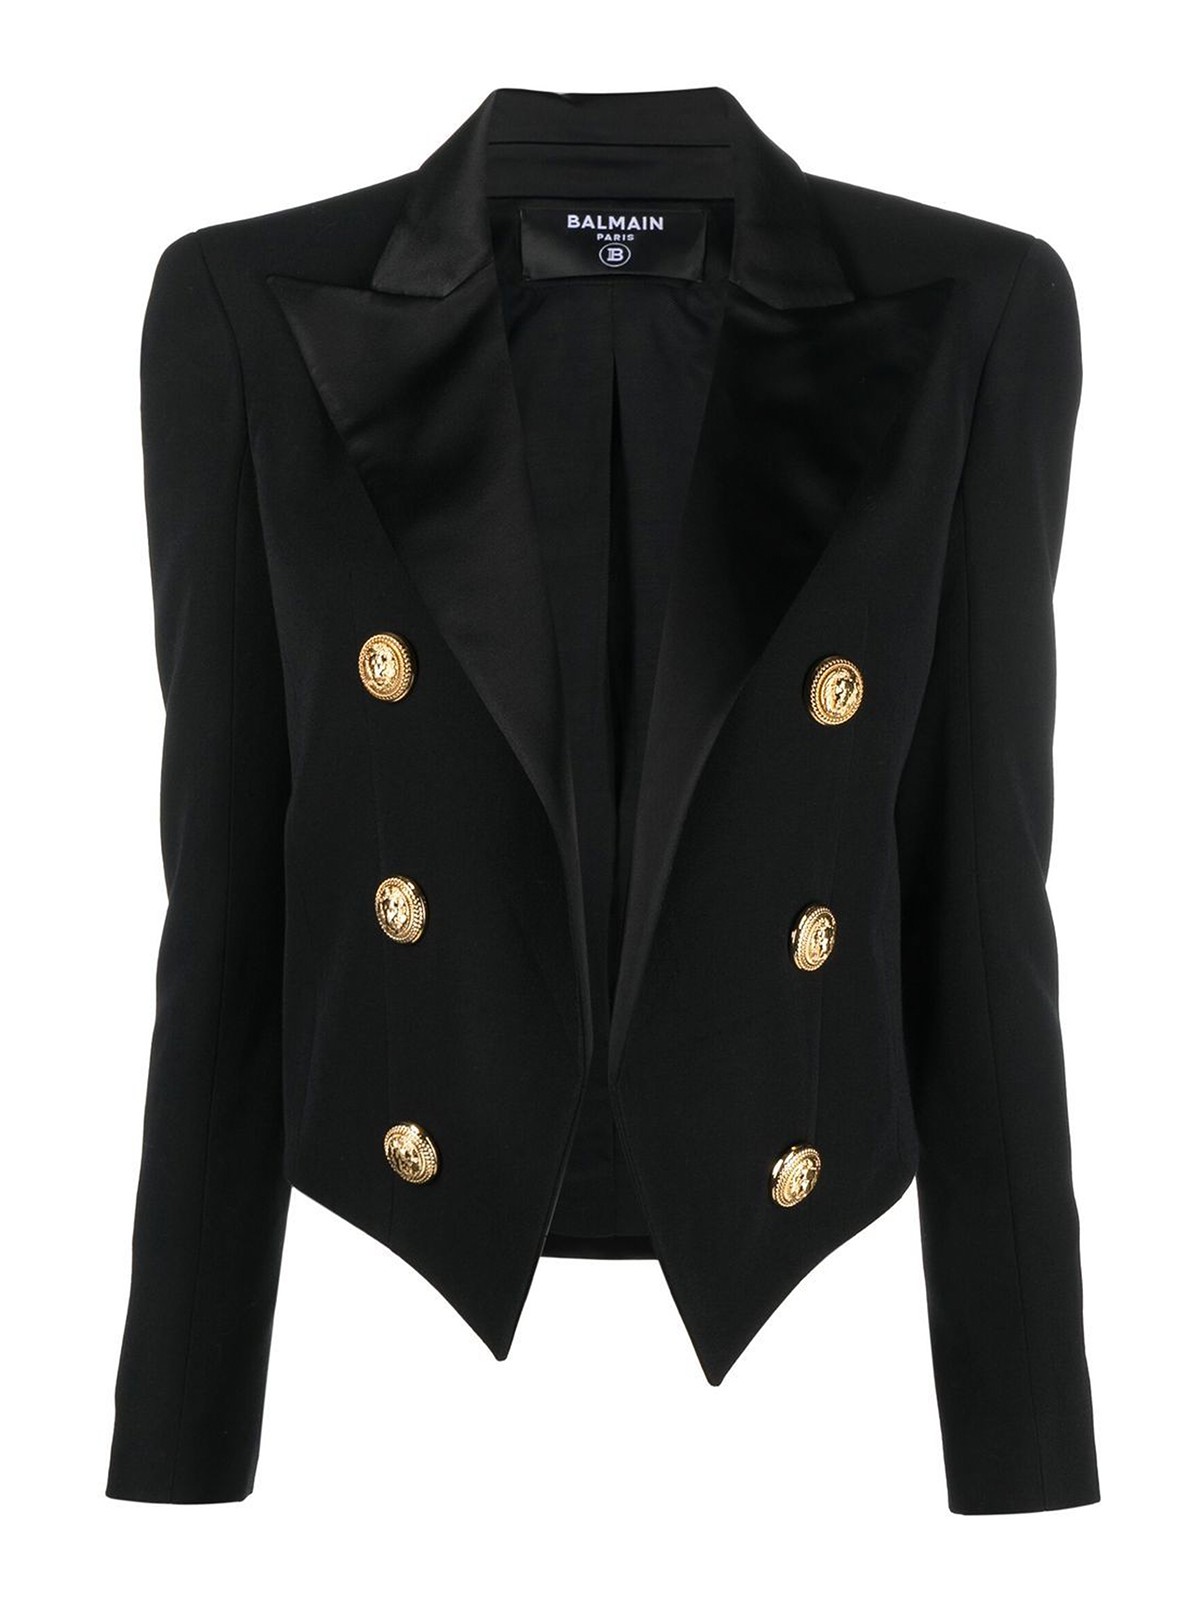 Blazers Balmain - Spencer jacket - YF1SC055MB020PA | Shop online at iKRIX